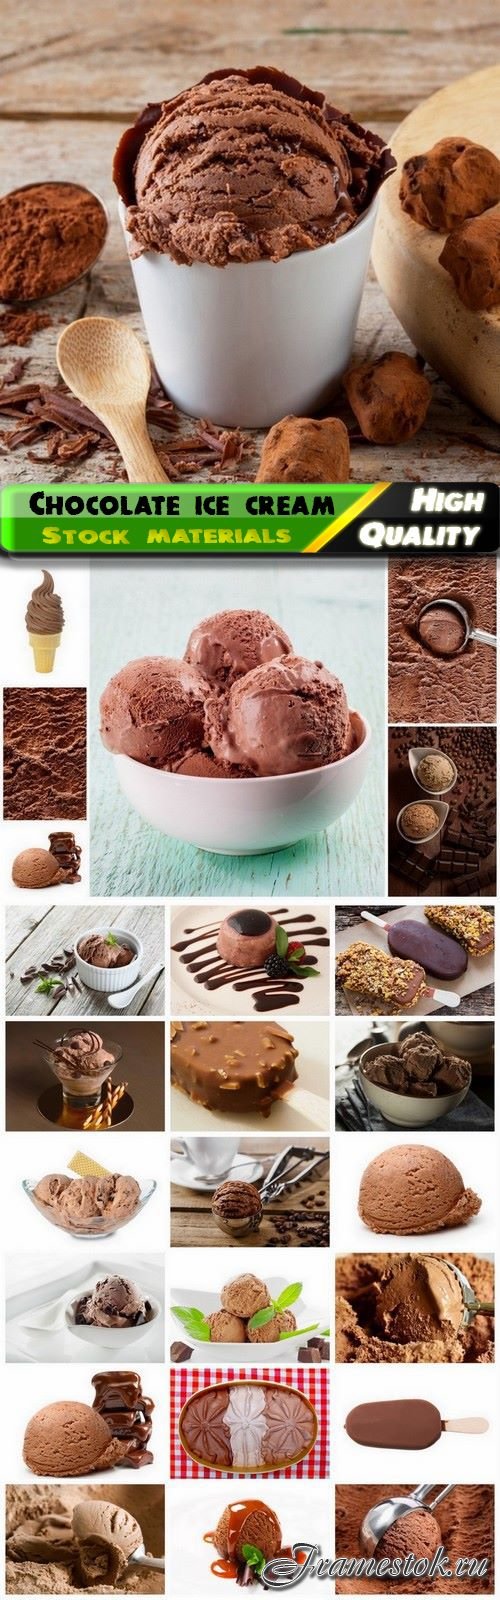 Sweet and cold chocolate ice cream - 25 HQ Jpg